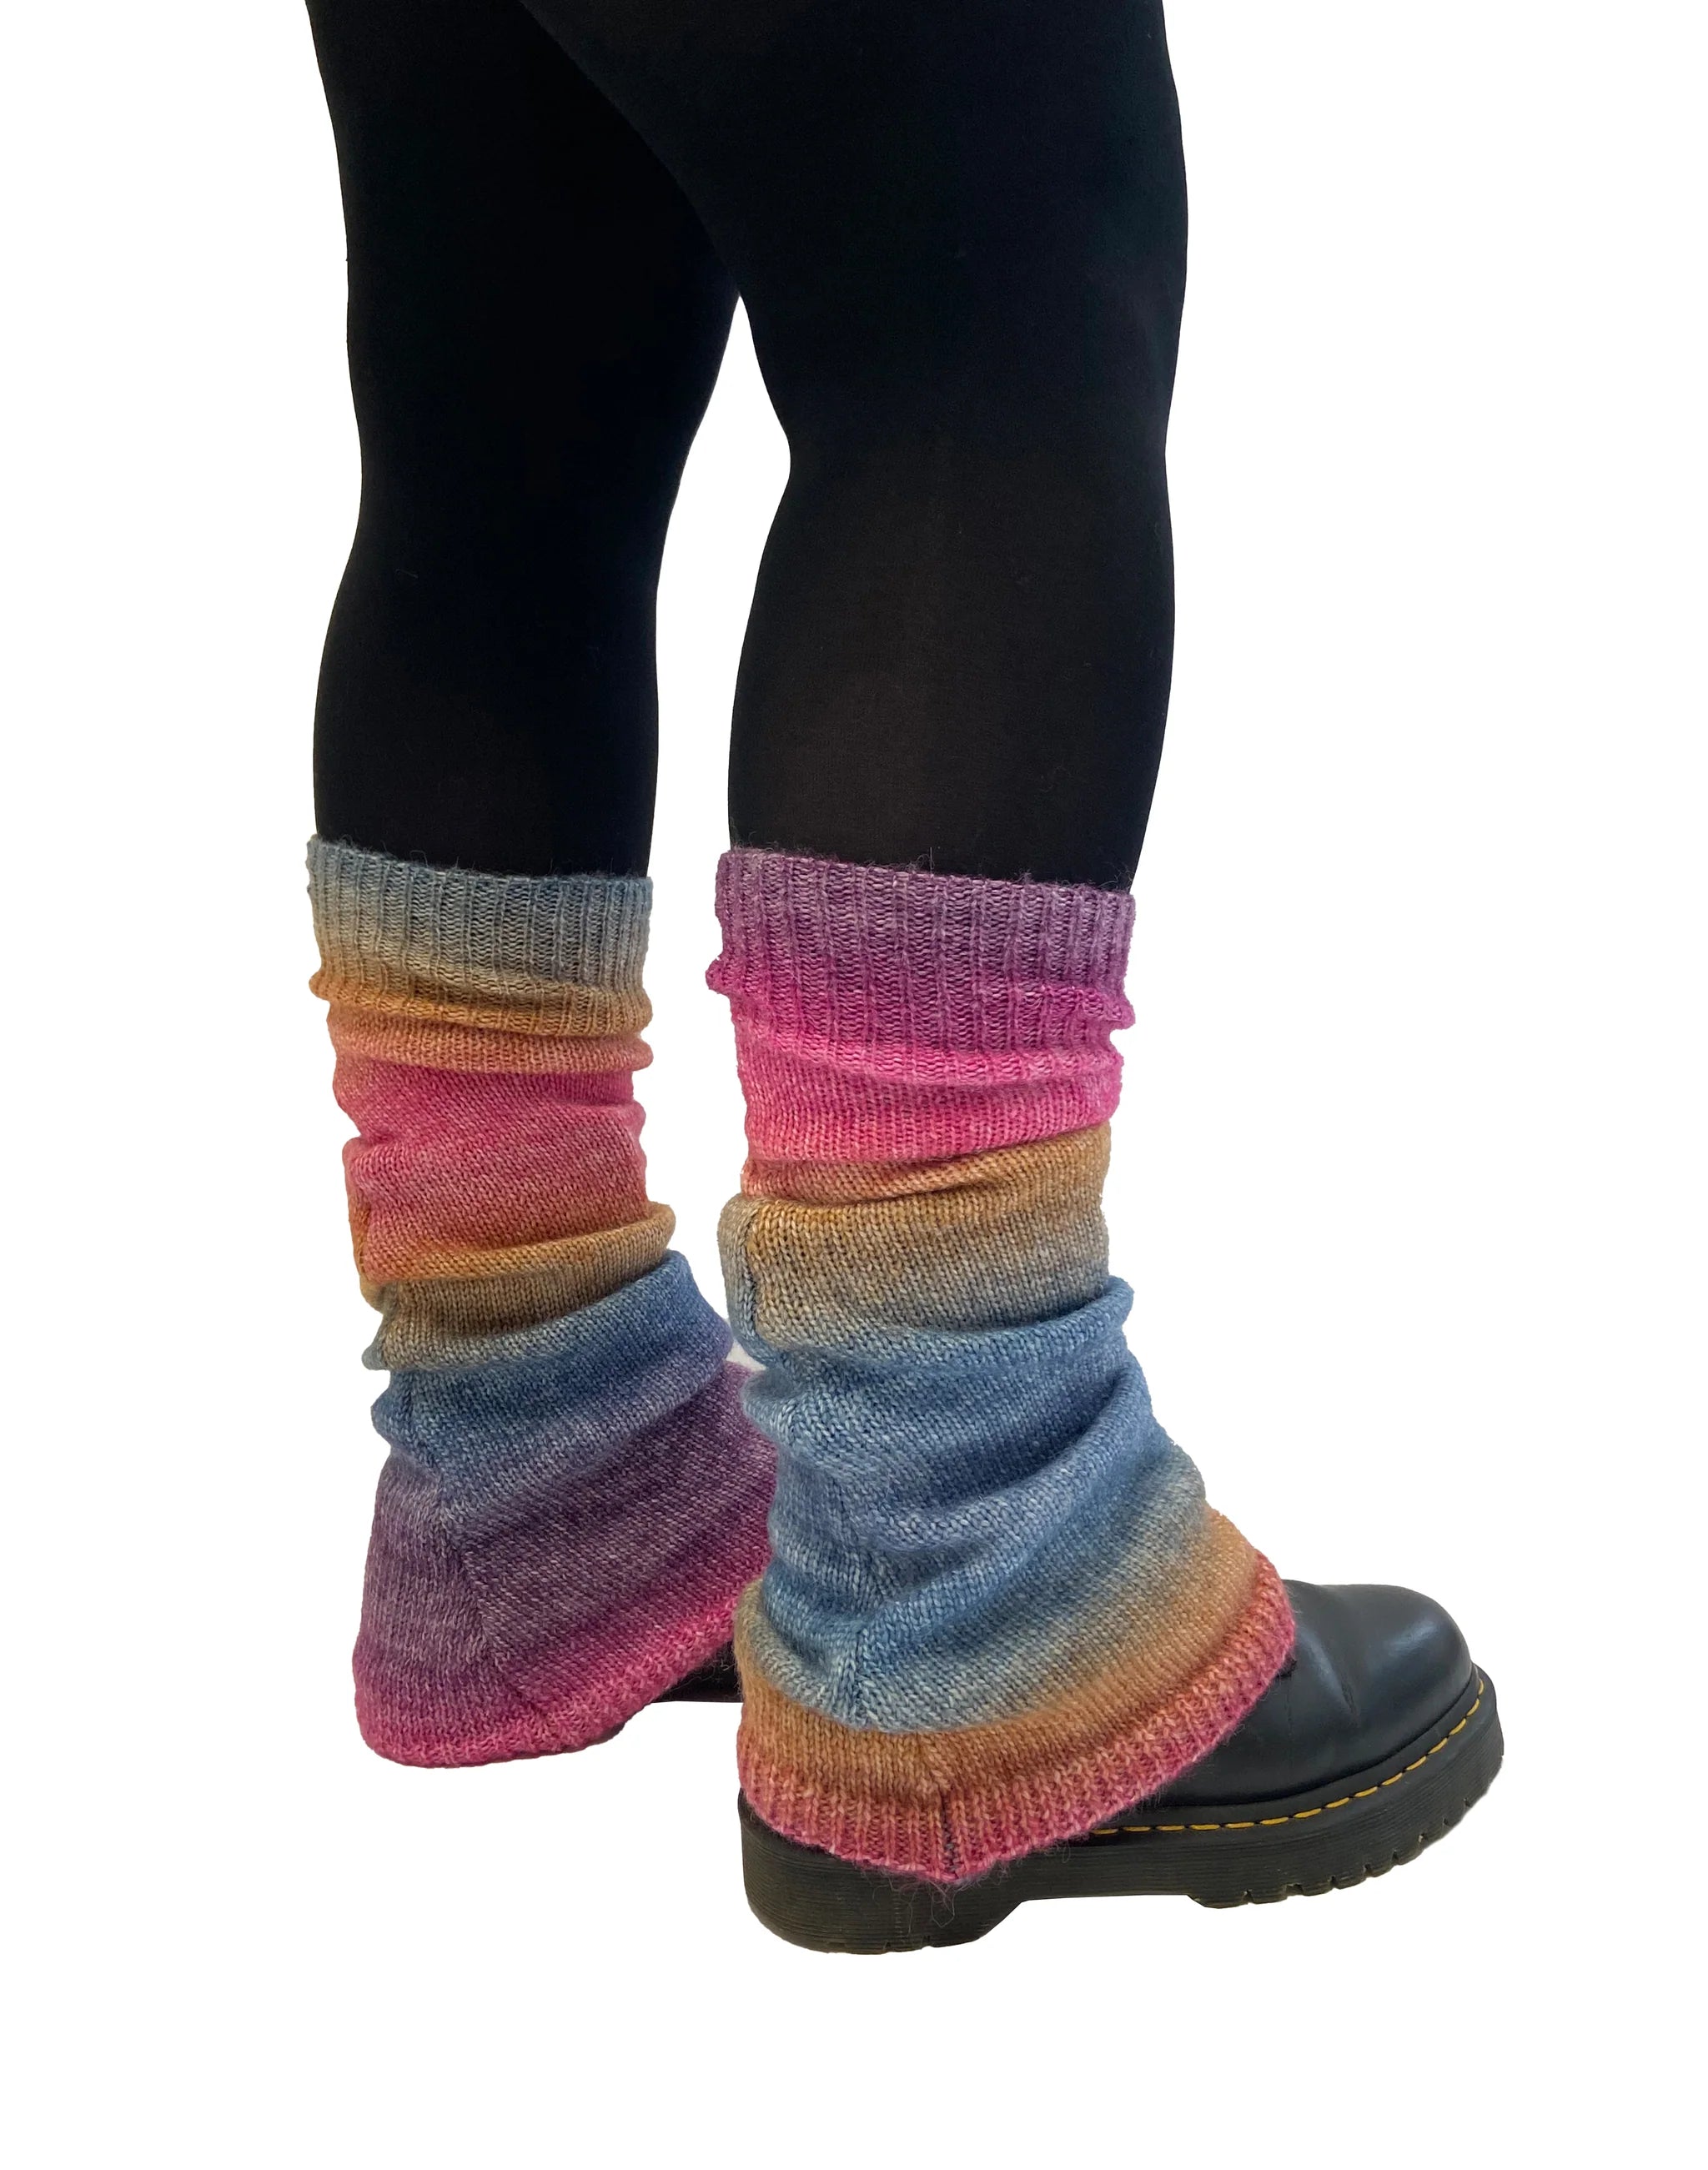 Wide Knitted Leg Warmers in Rainbow - The Sockery